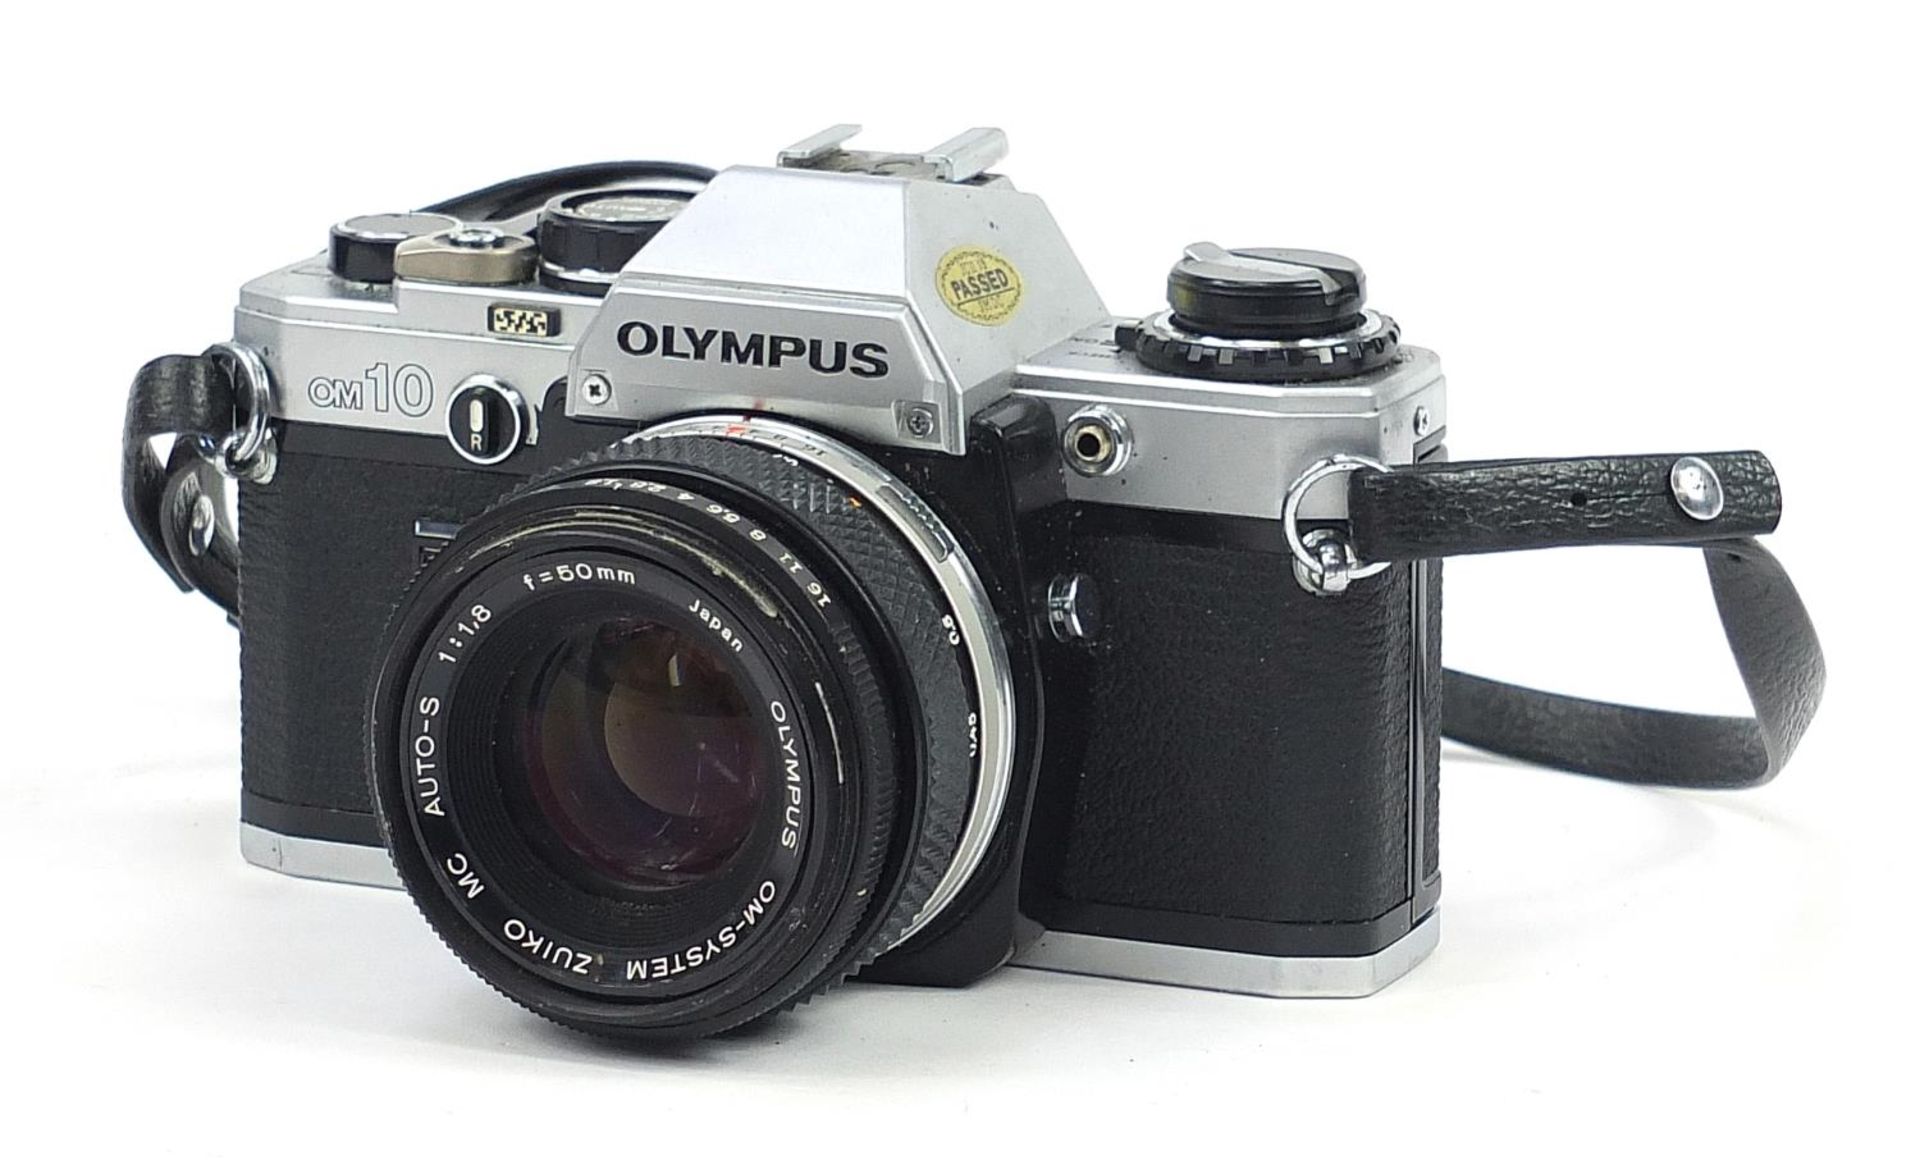 Olympus OM10 camera with a Tecno carry case - Bild 2 aus 4